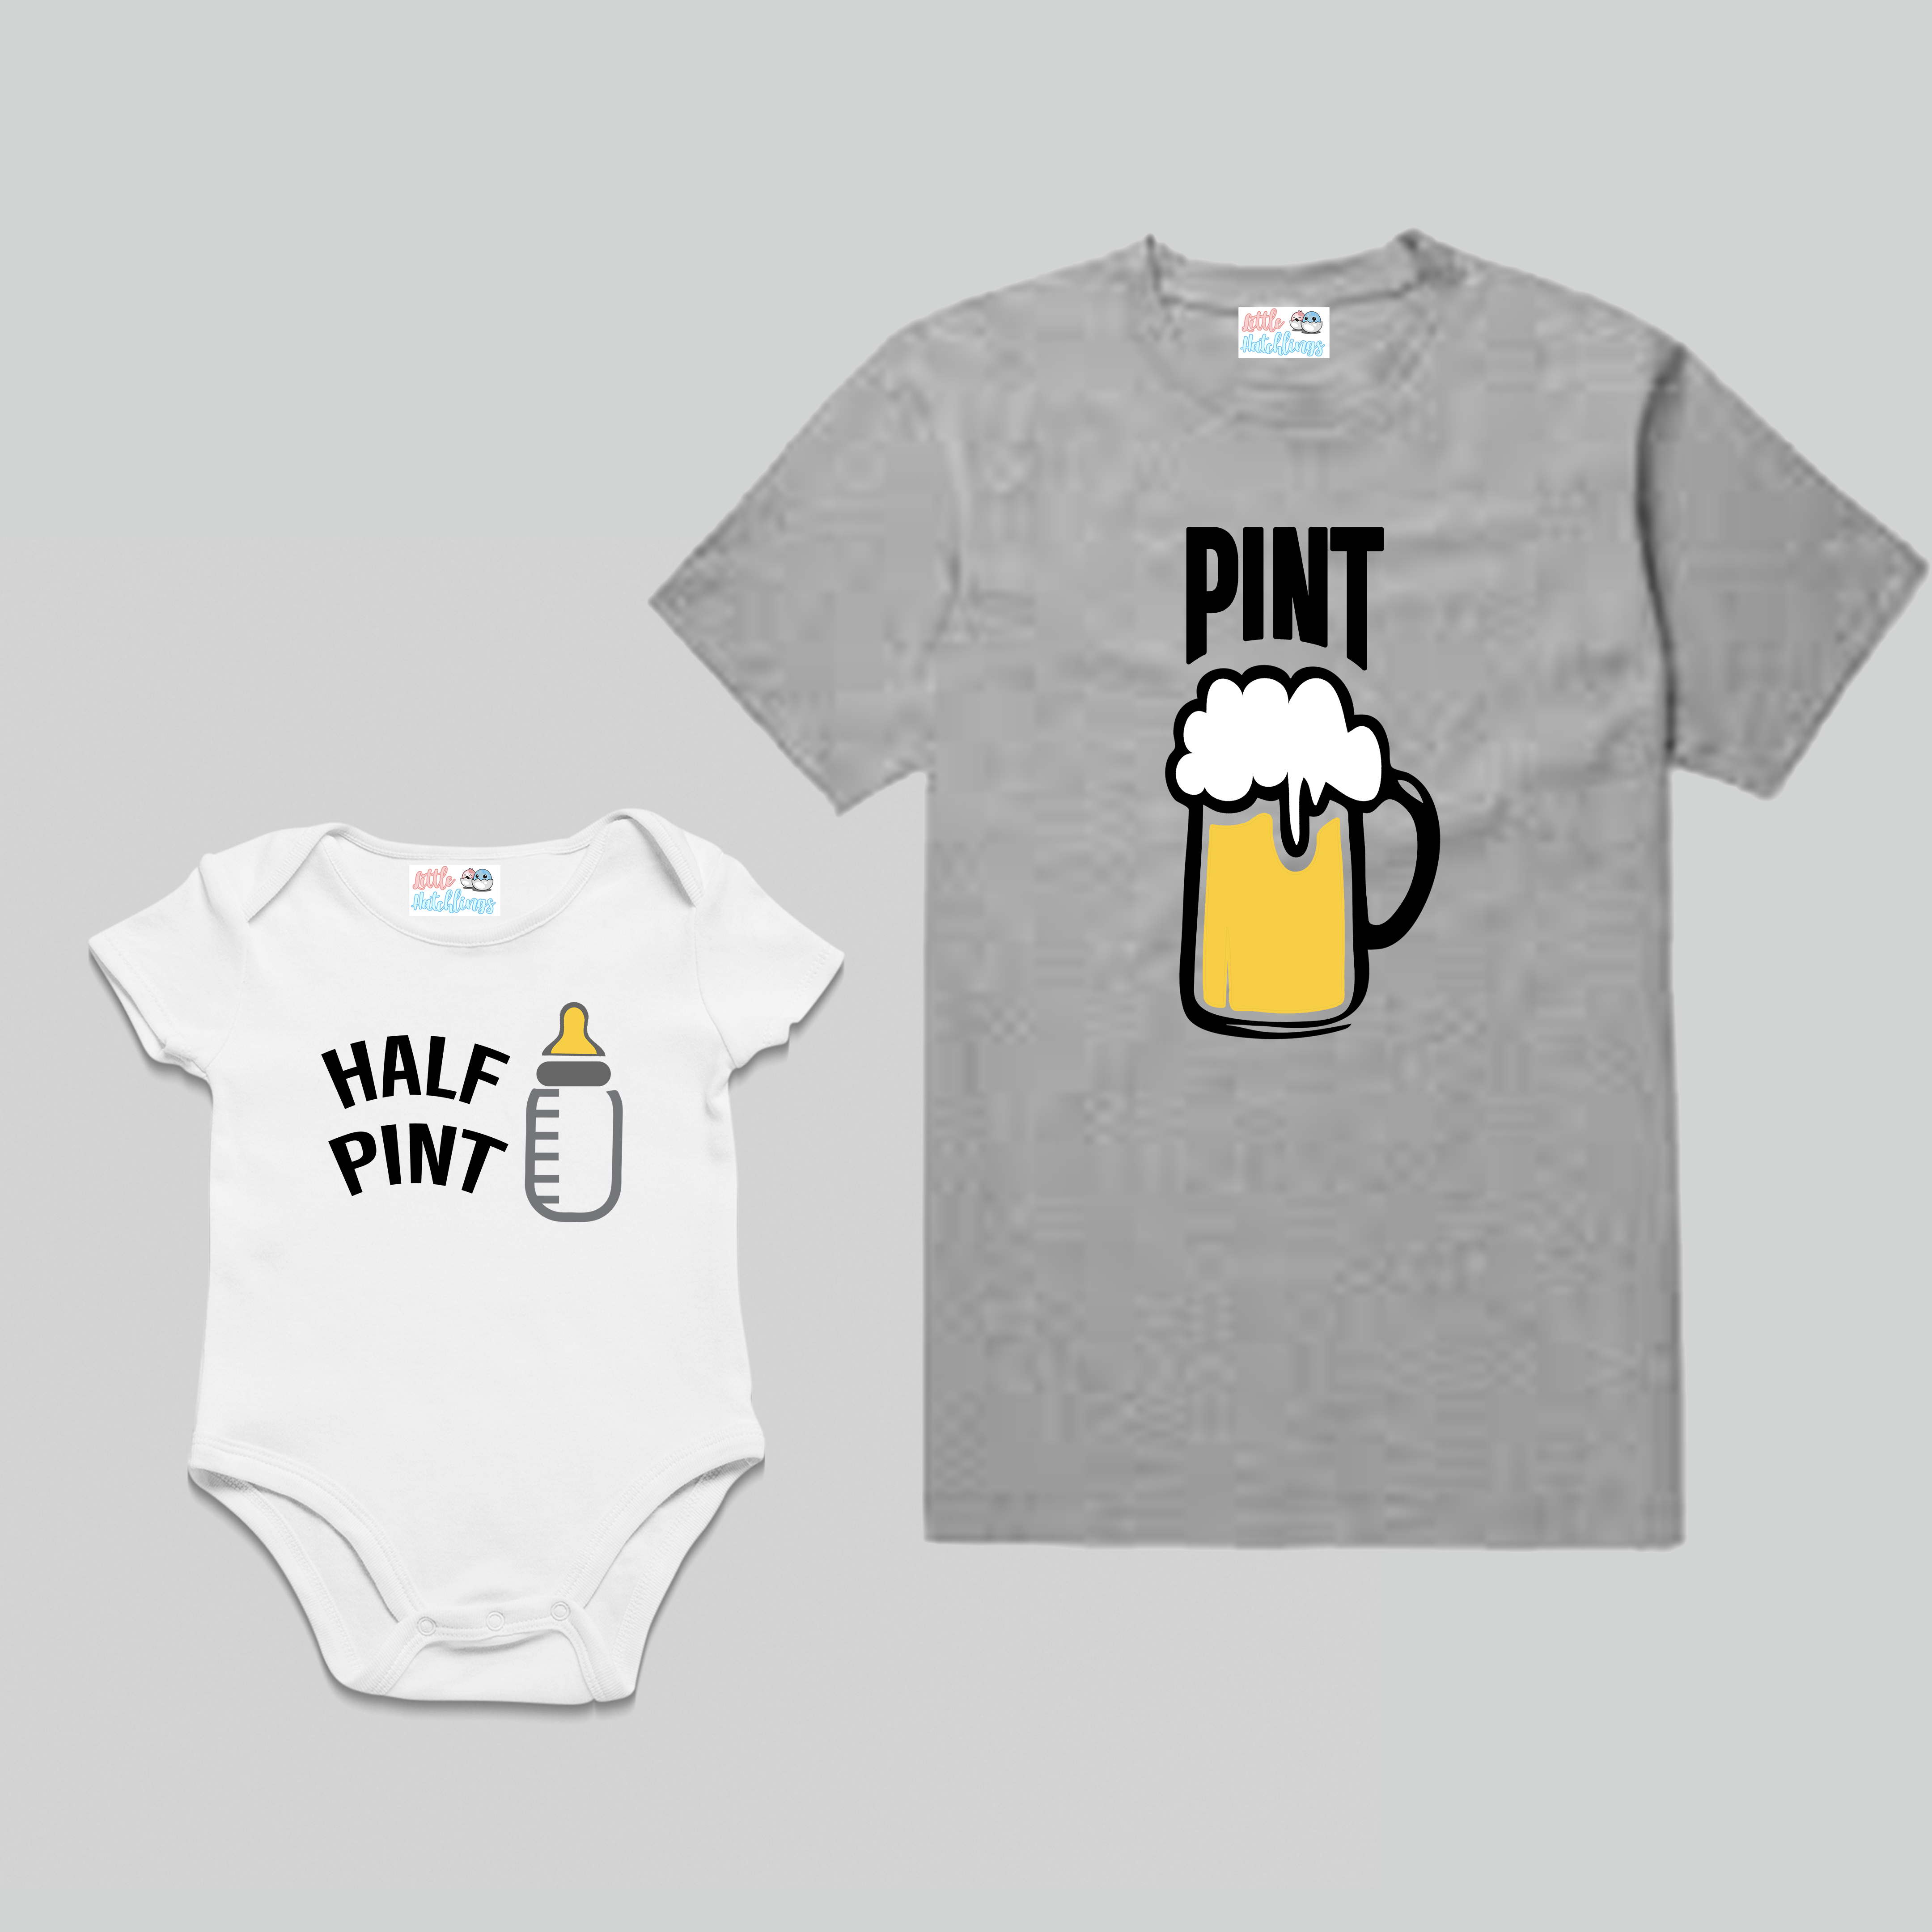 Pint + Half Pint White And Grey Combo (Milk Bottle & Beer Mug) - Adult Tshirt + Kids Tshirt